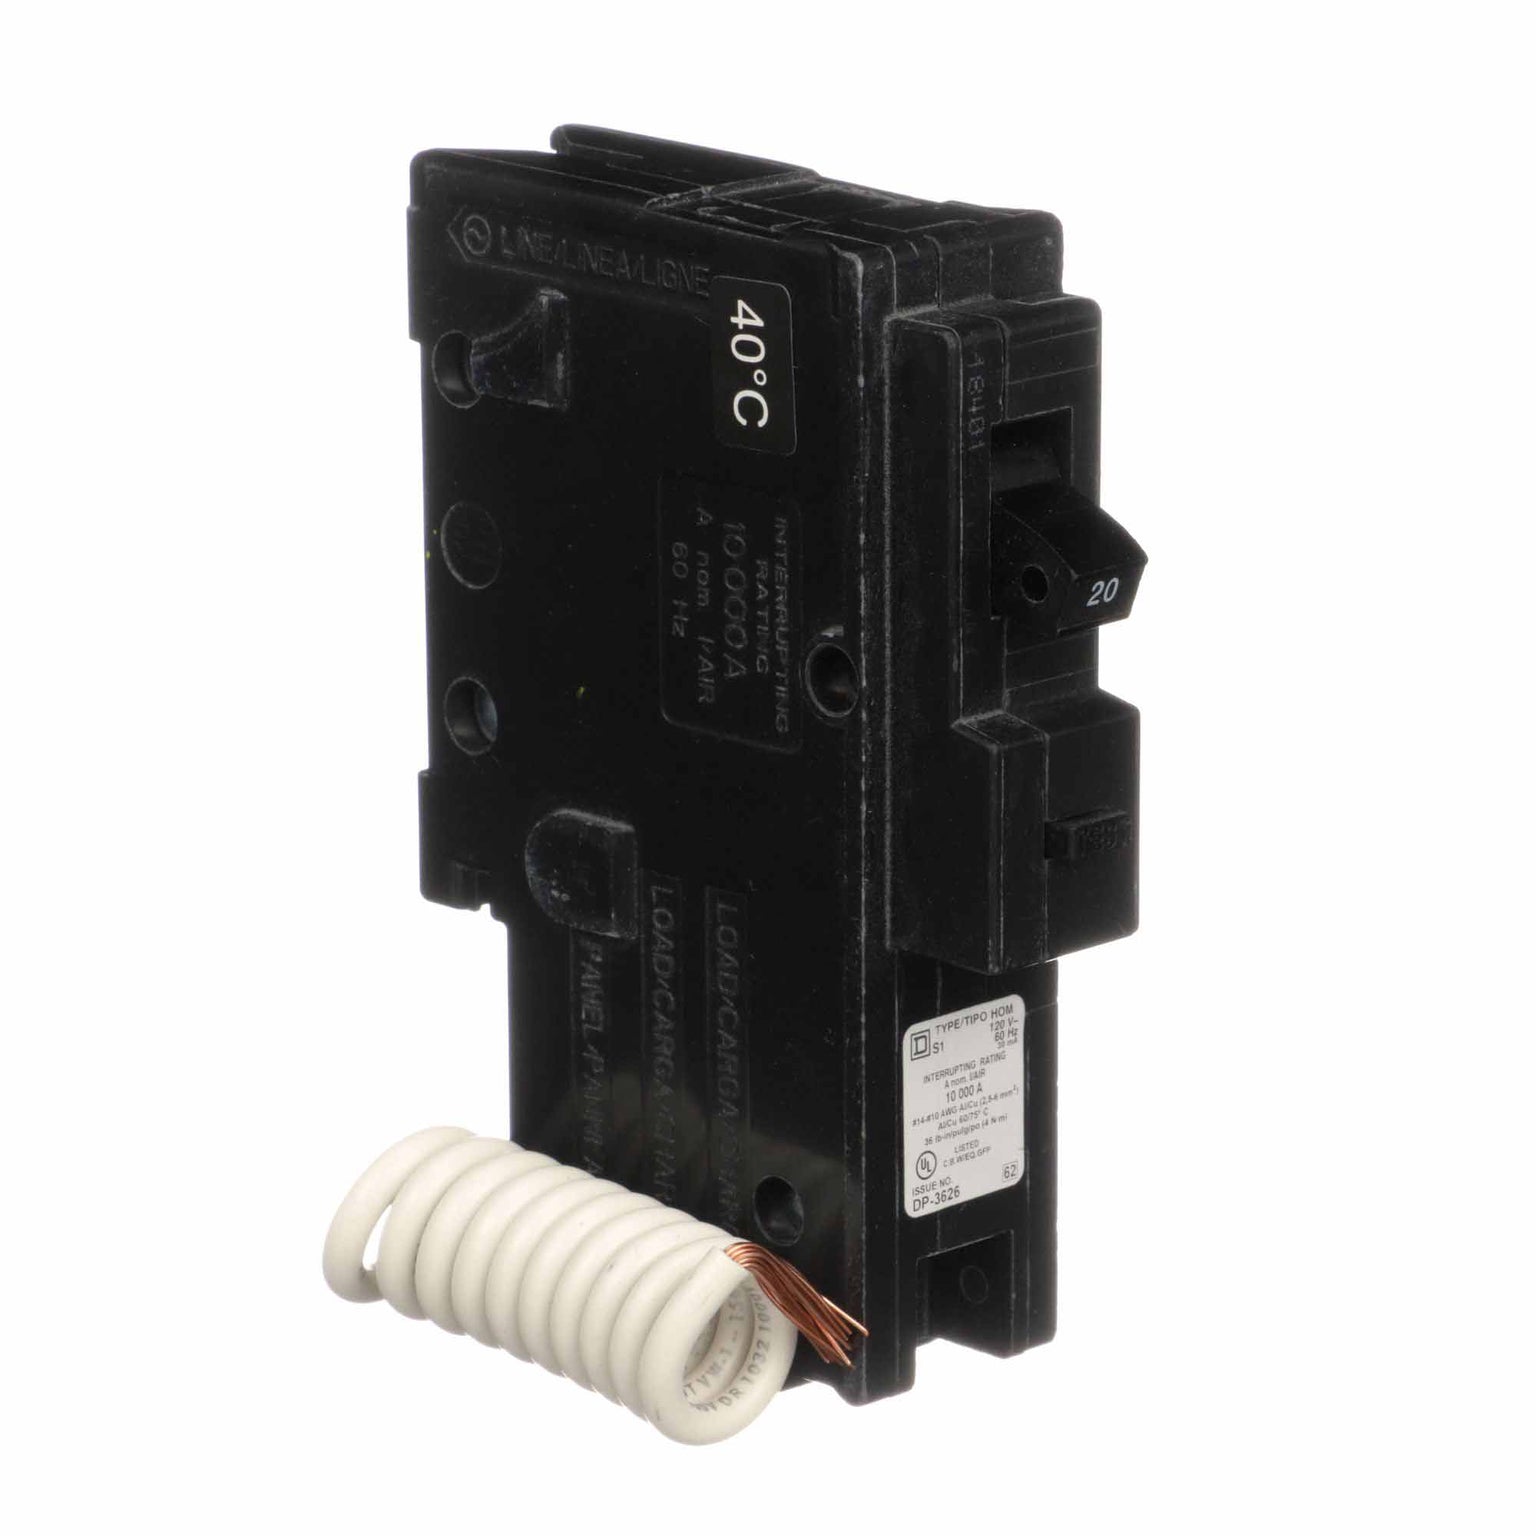 HOM120EPD - Square D - 20 Amp Molded Case Circuit Breaker